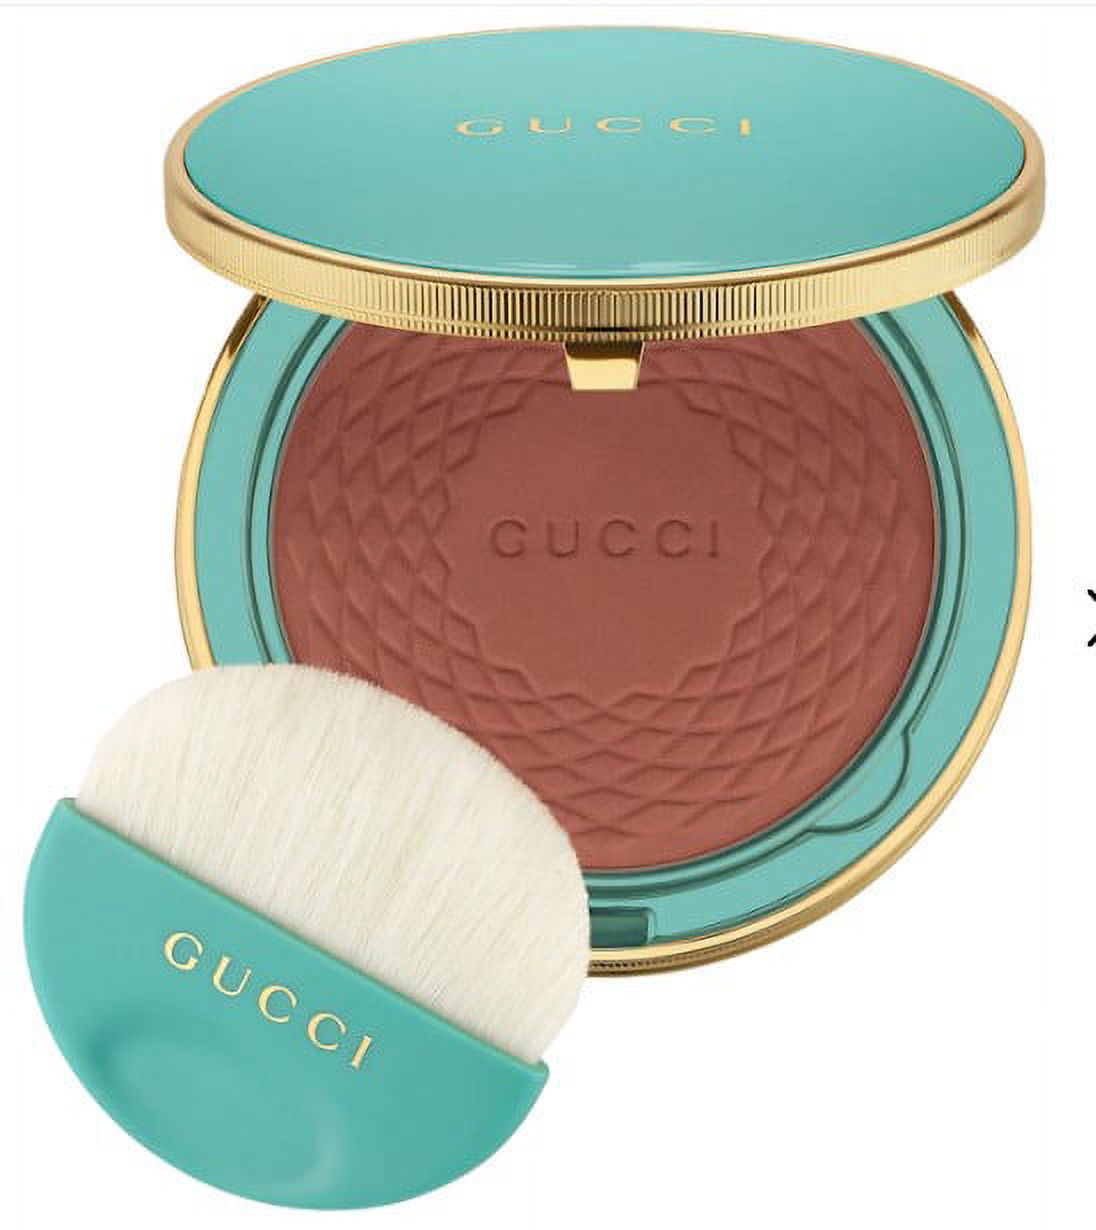 Gucci Poudre De Beaute Bronzing Powder 05 0.42Oz/12g New With Box - image 1 of 2